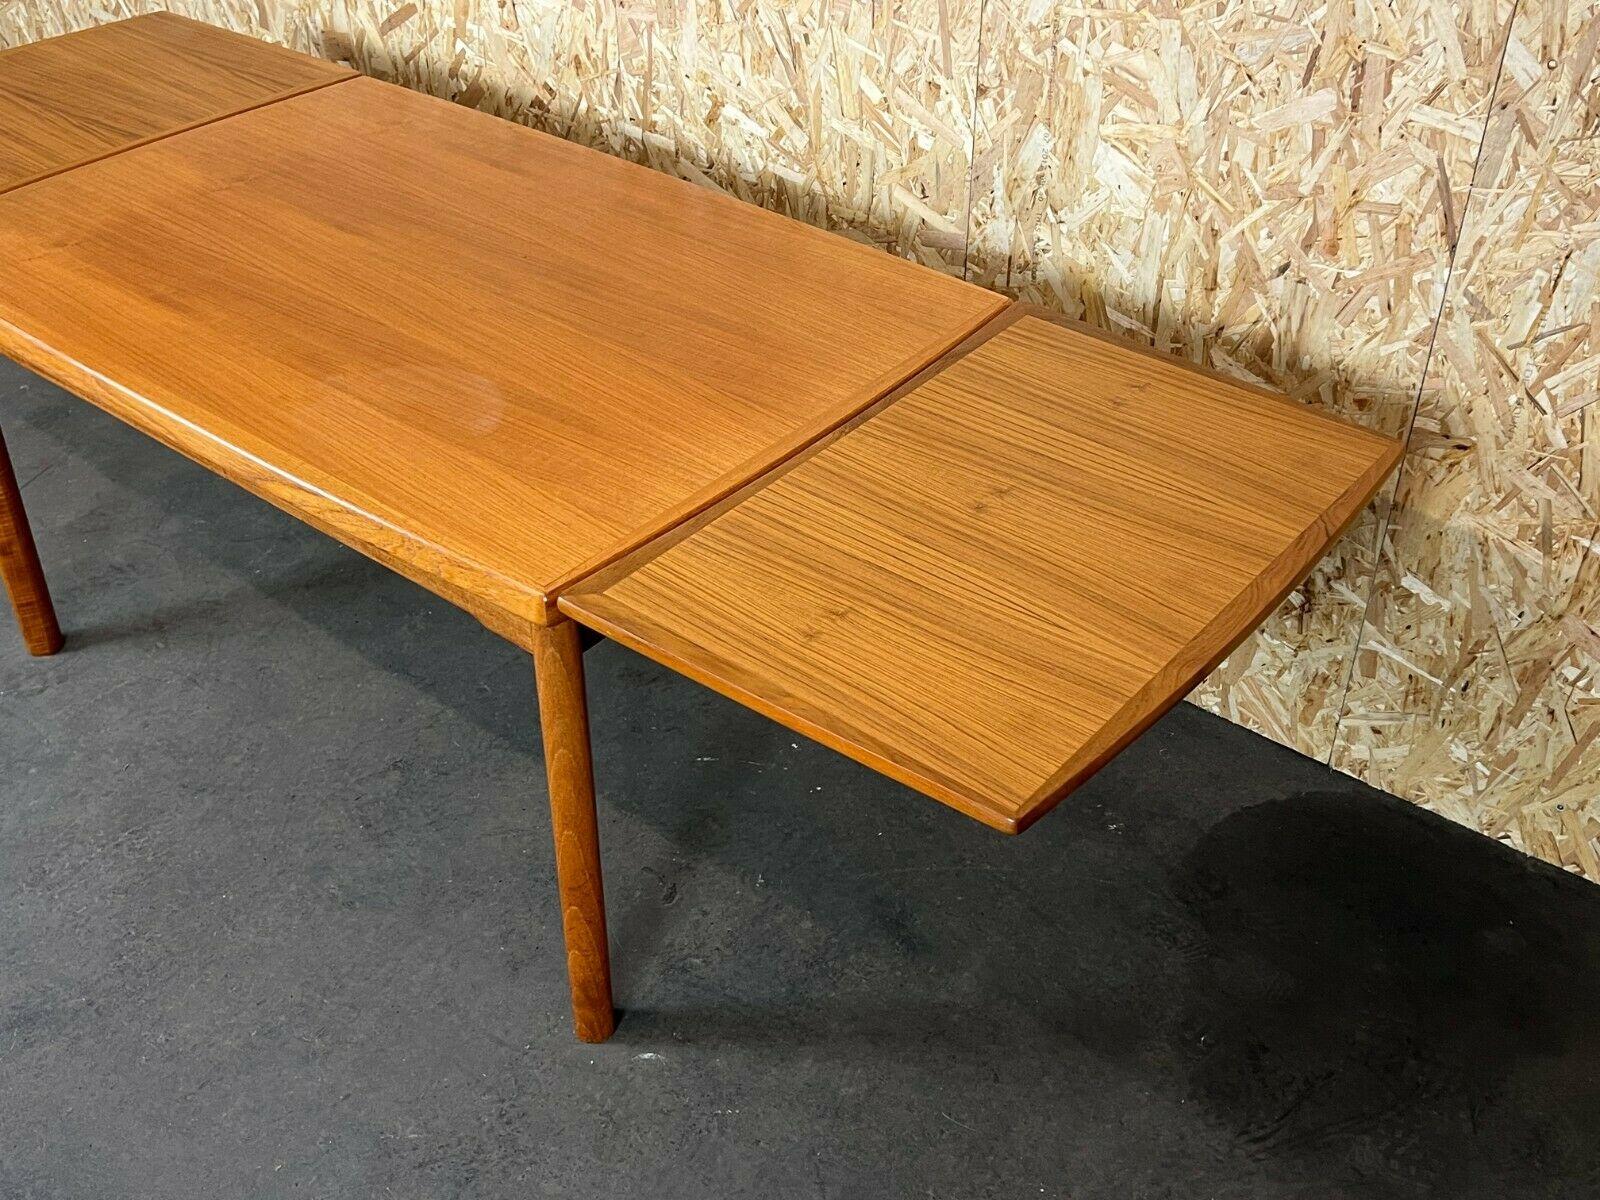 60s 70s Teak Coffee Table Danish Modern Design Denmark 60s For Sale 5